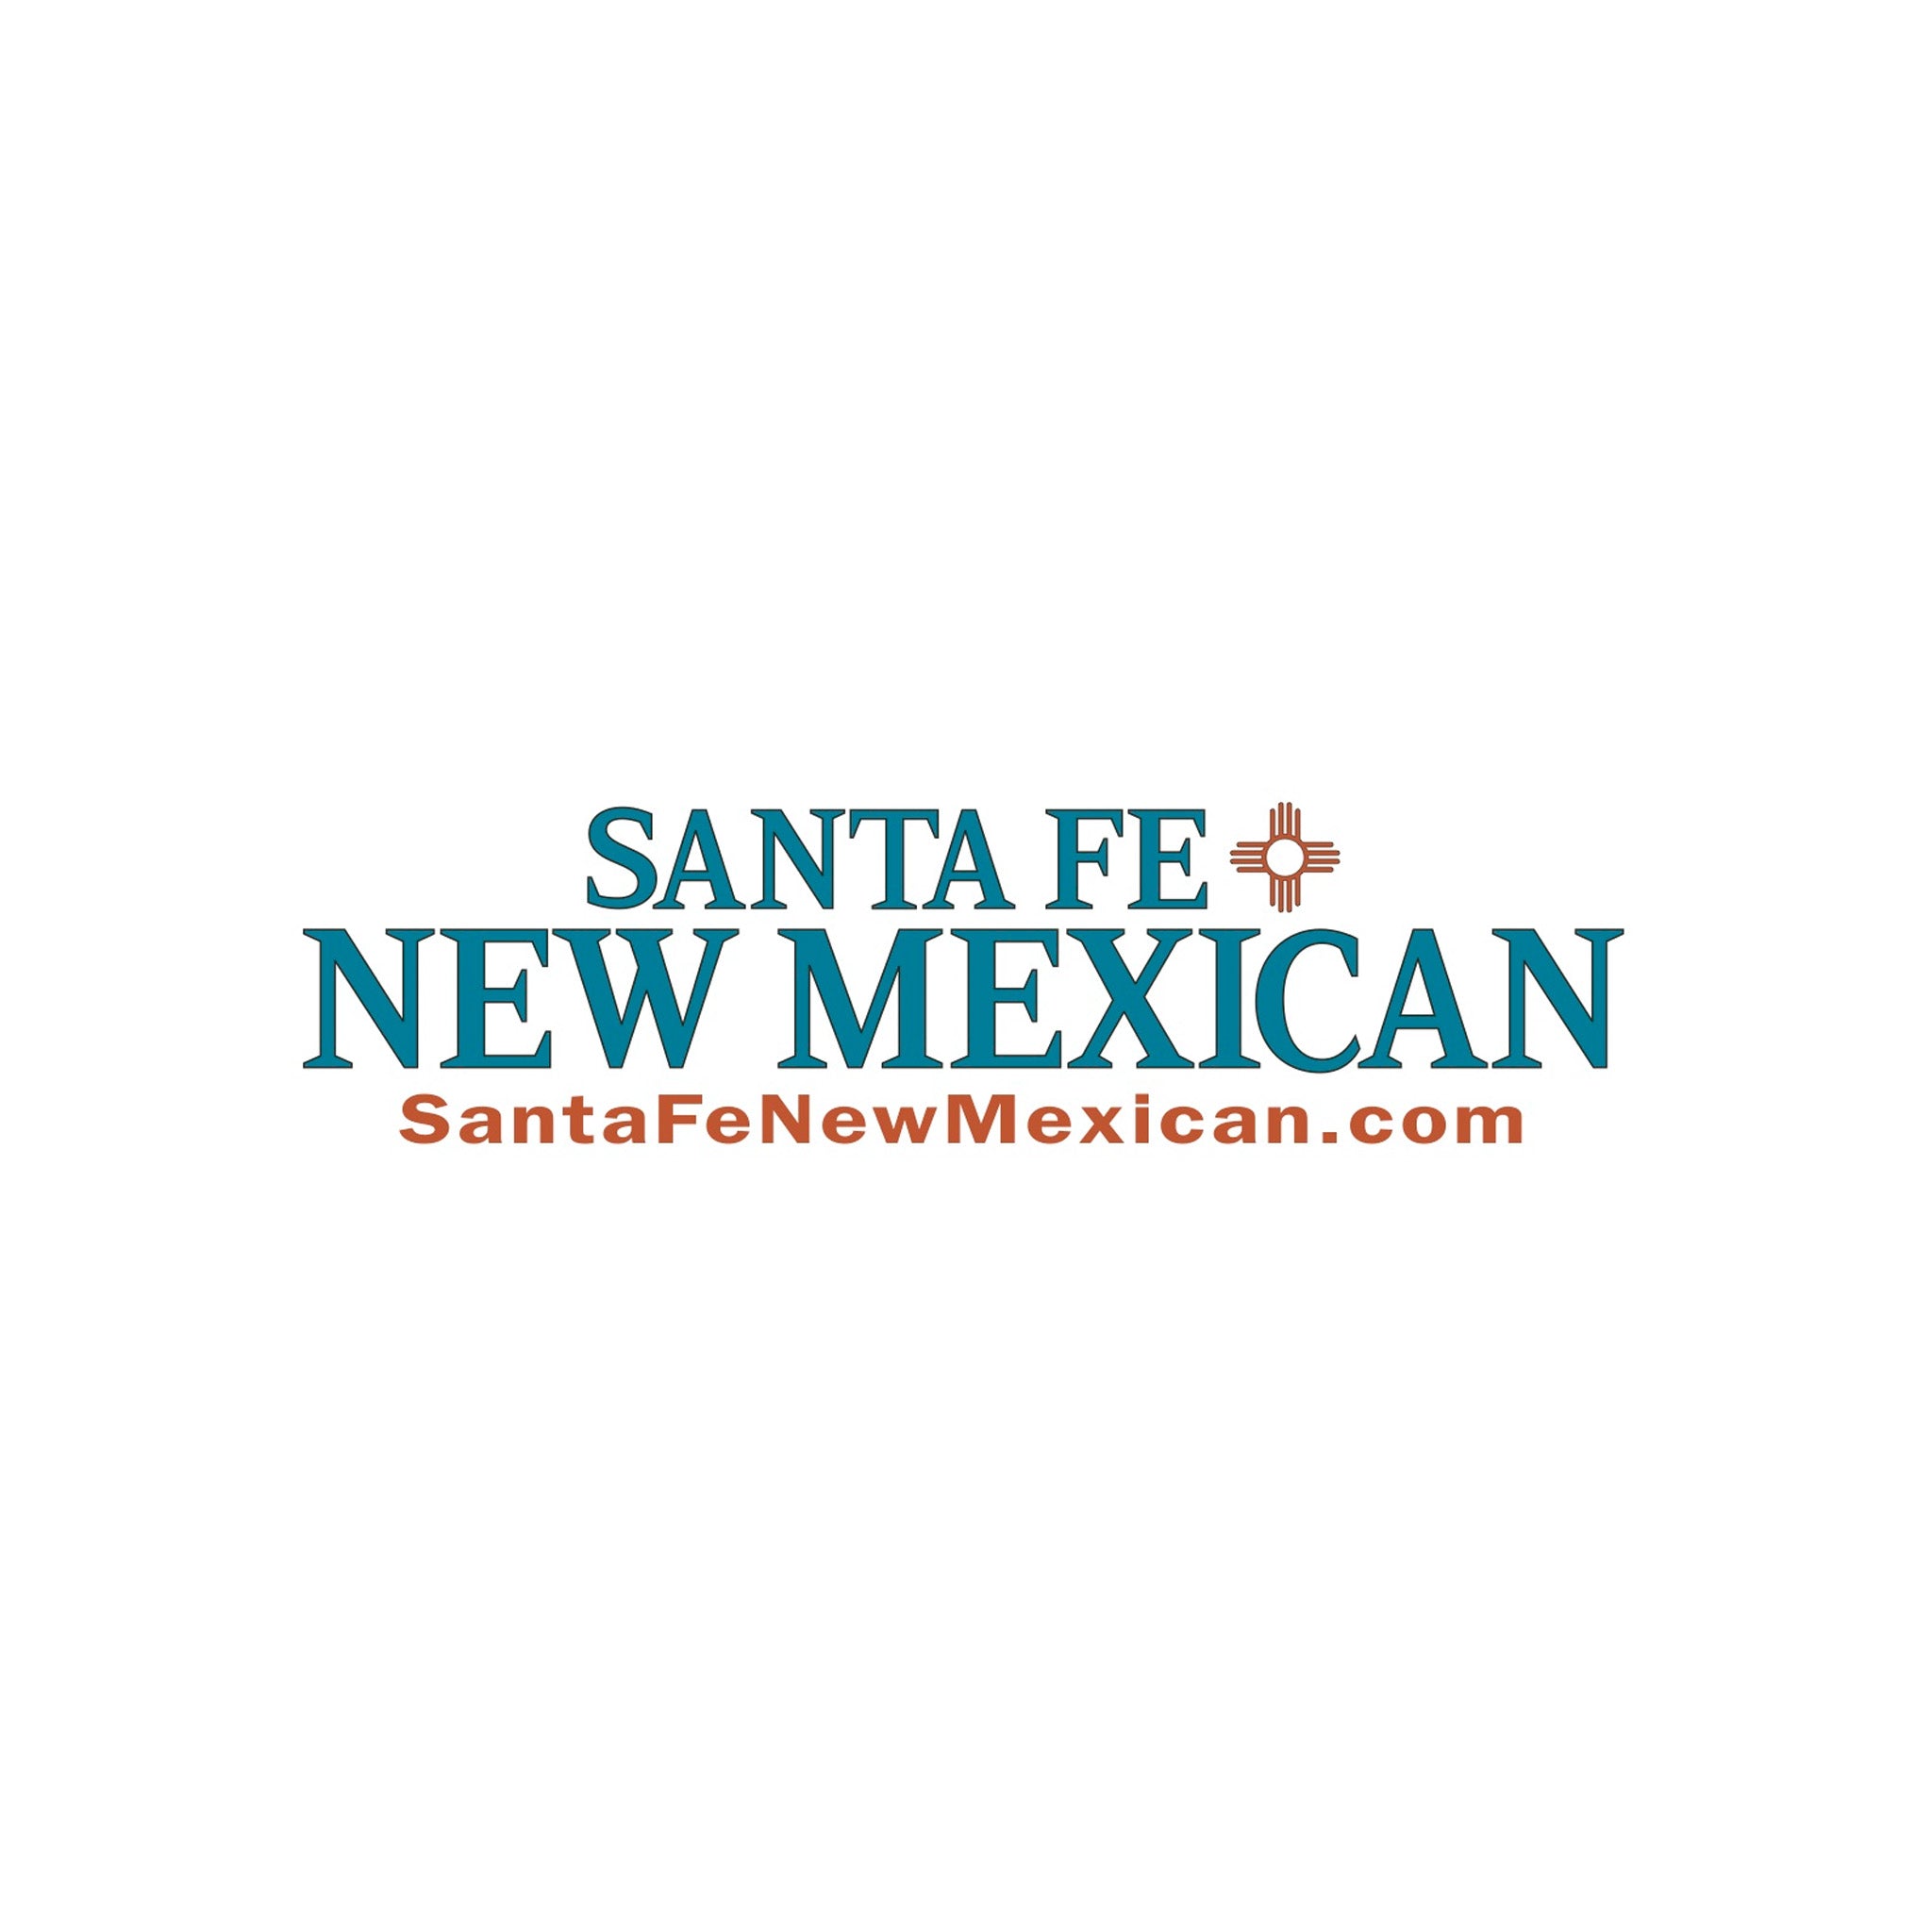 Santa Fe New Mexican: Los Poblanos Farm Shop brings gin tasting room to downtown Santa Fe